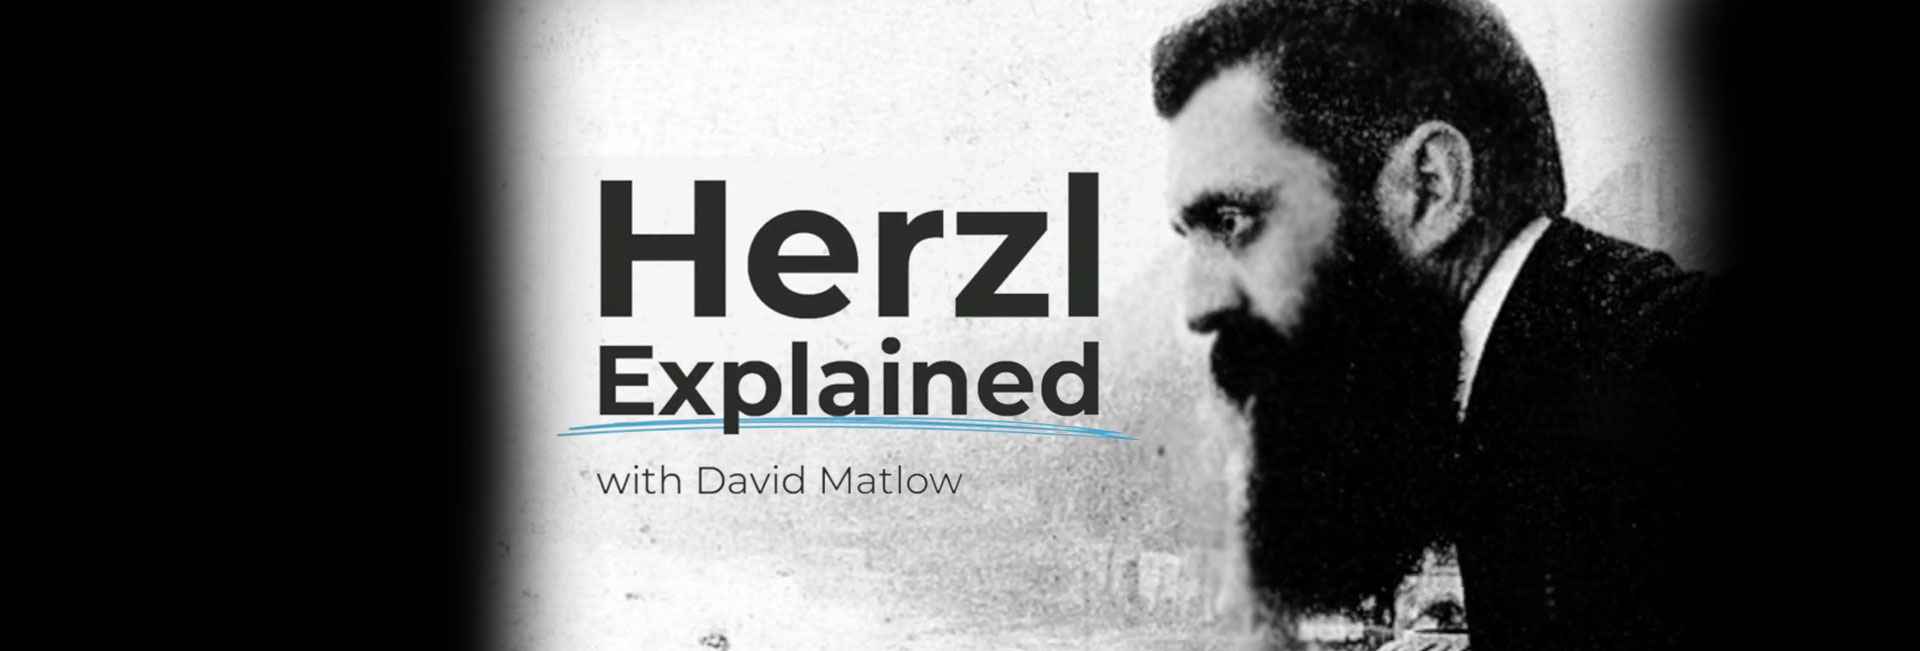 Herzl’s dream is finally realized | Episode 6: Herzl Explained